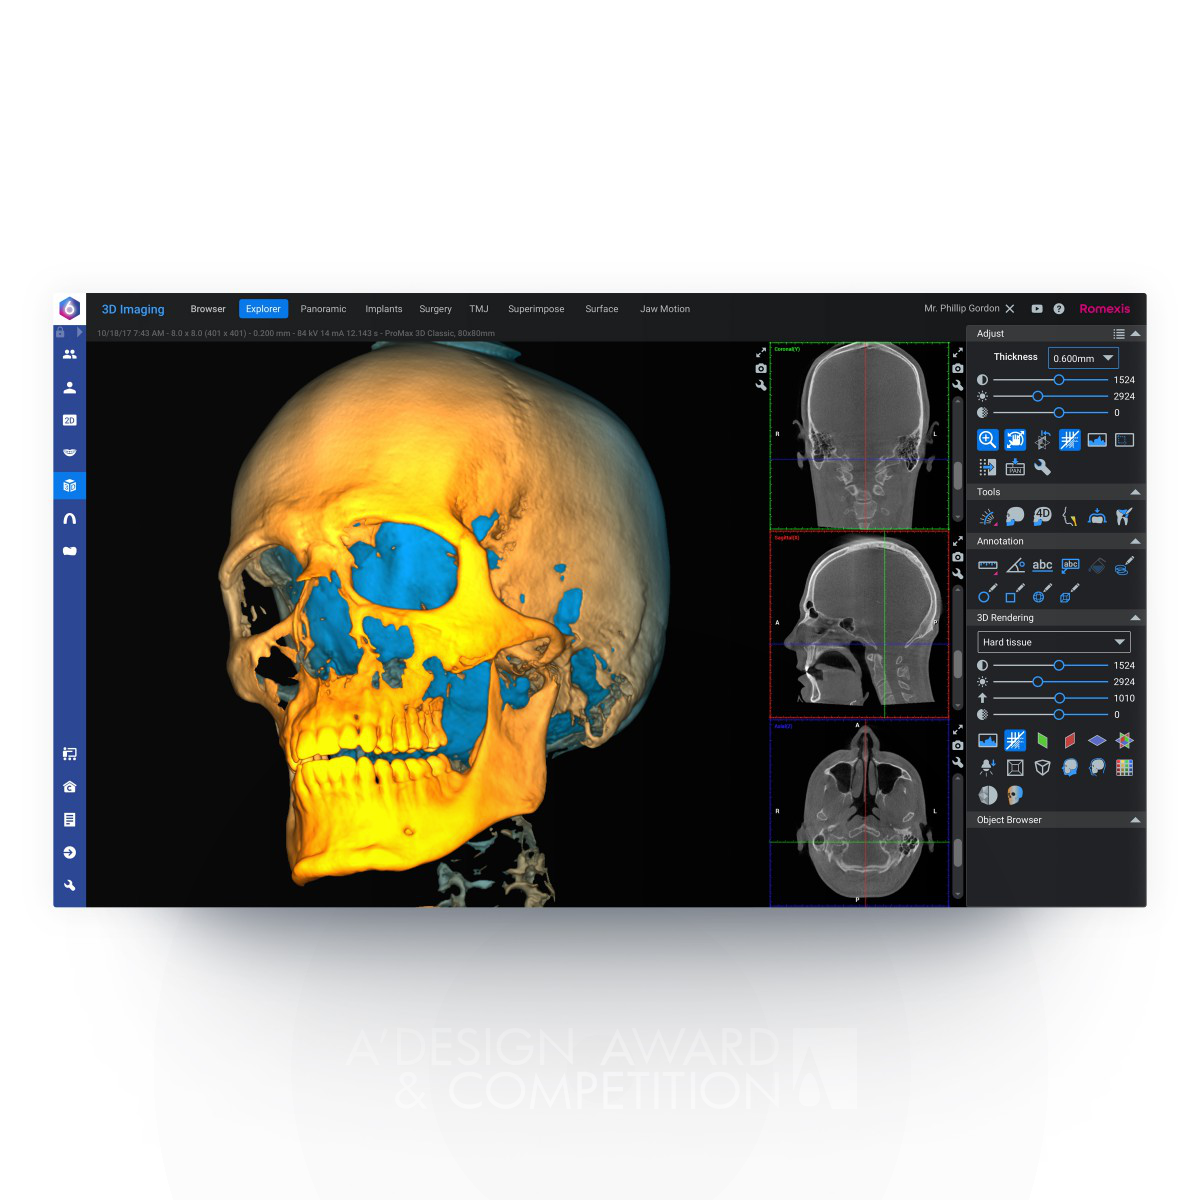 Planmeca Dental Imaging Software